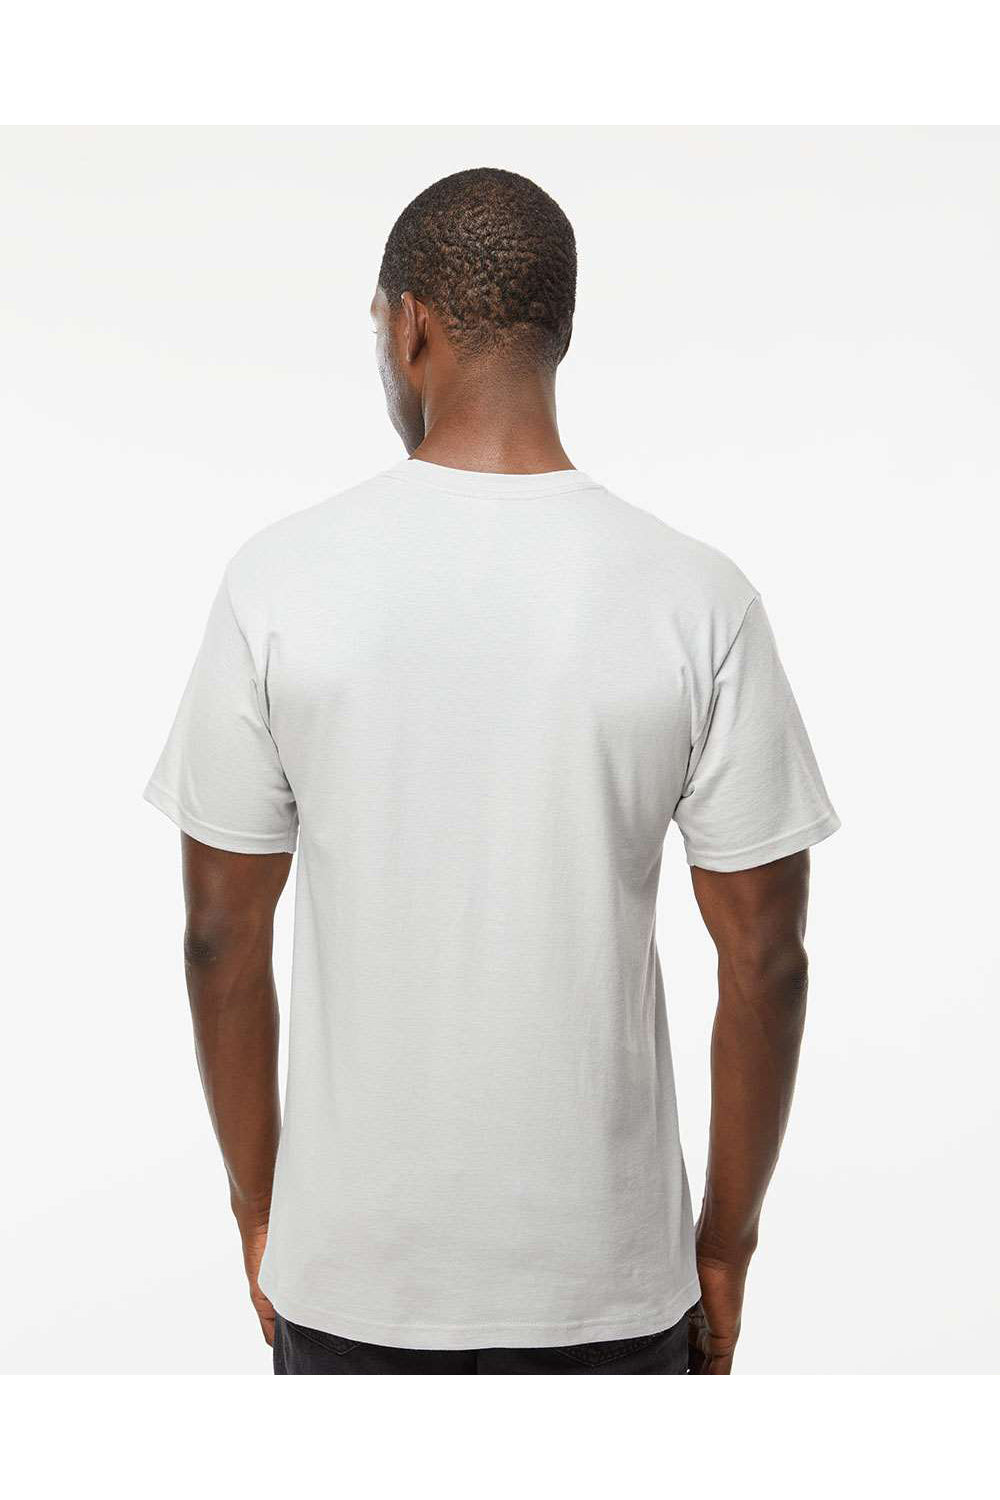 M&O 4800 Mens Gold Soft Touch Short Sleeve Crewneck T-Shirt Platinum Grey Model Back